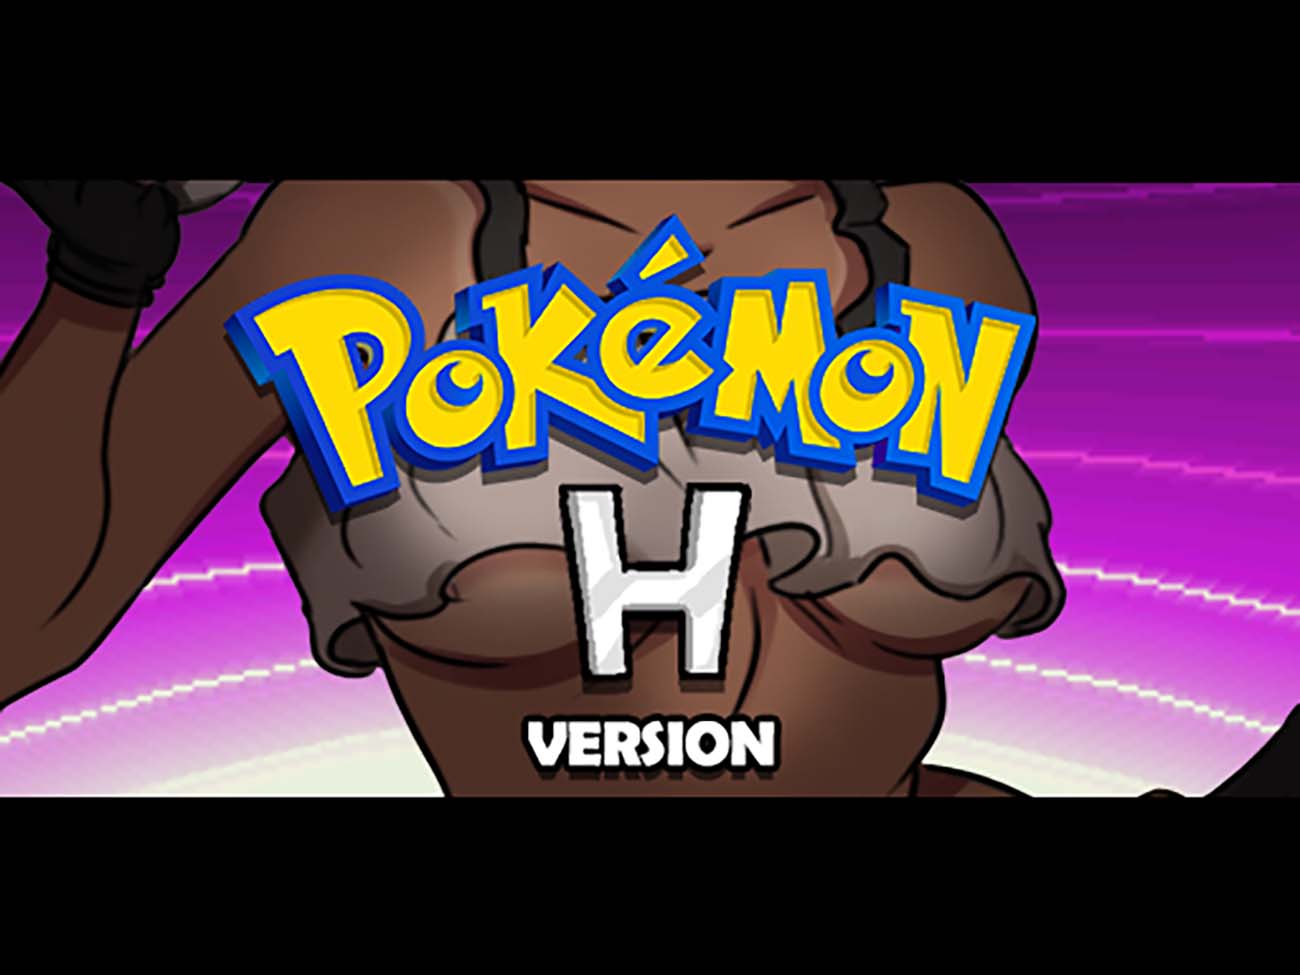 Pokémon "H"